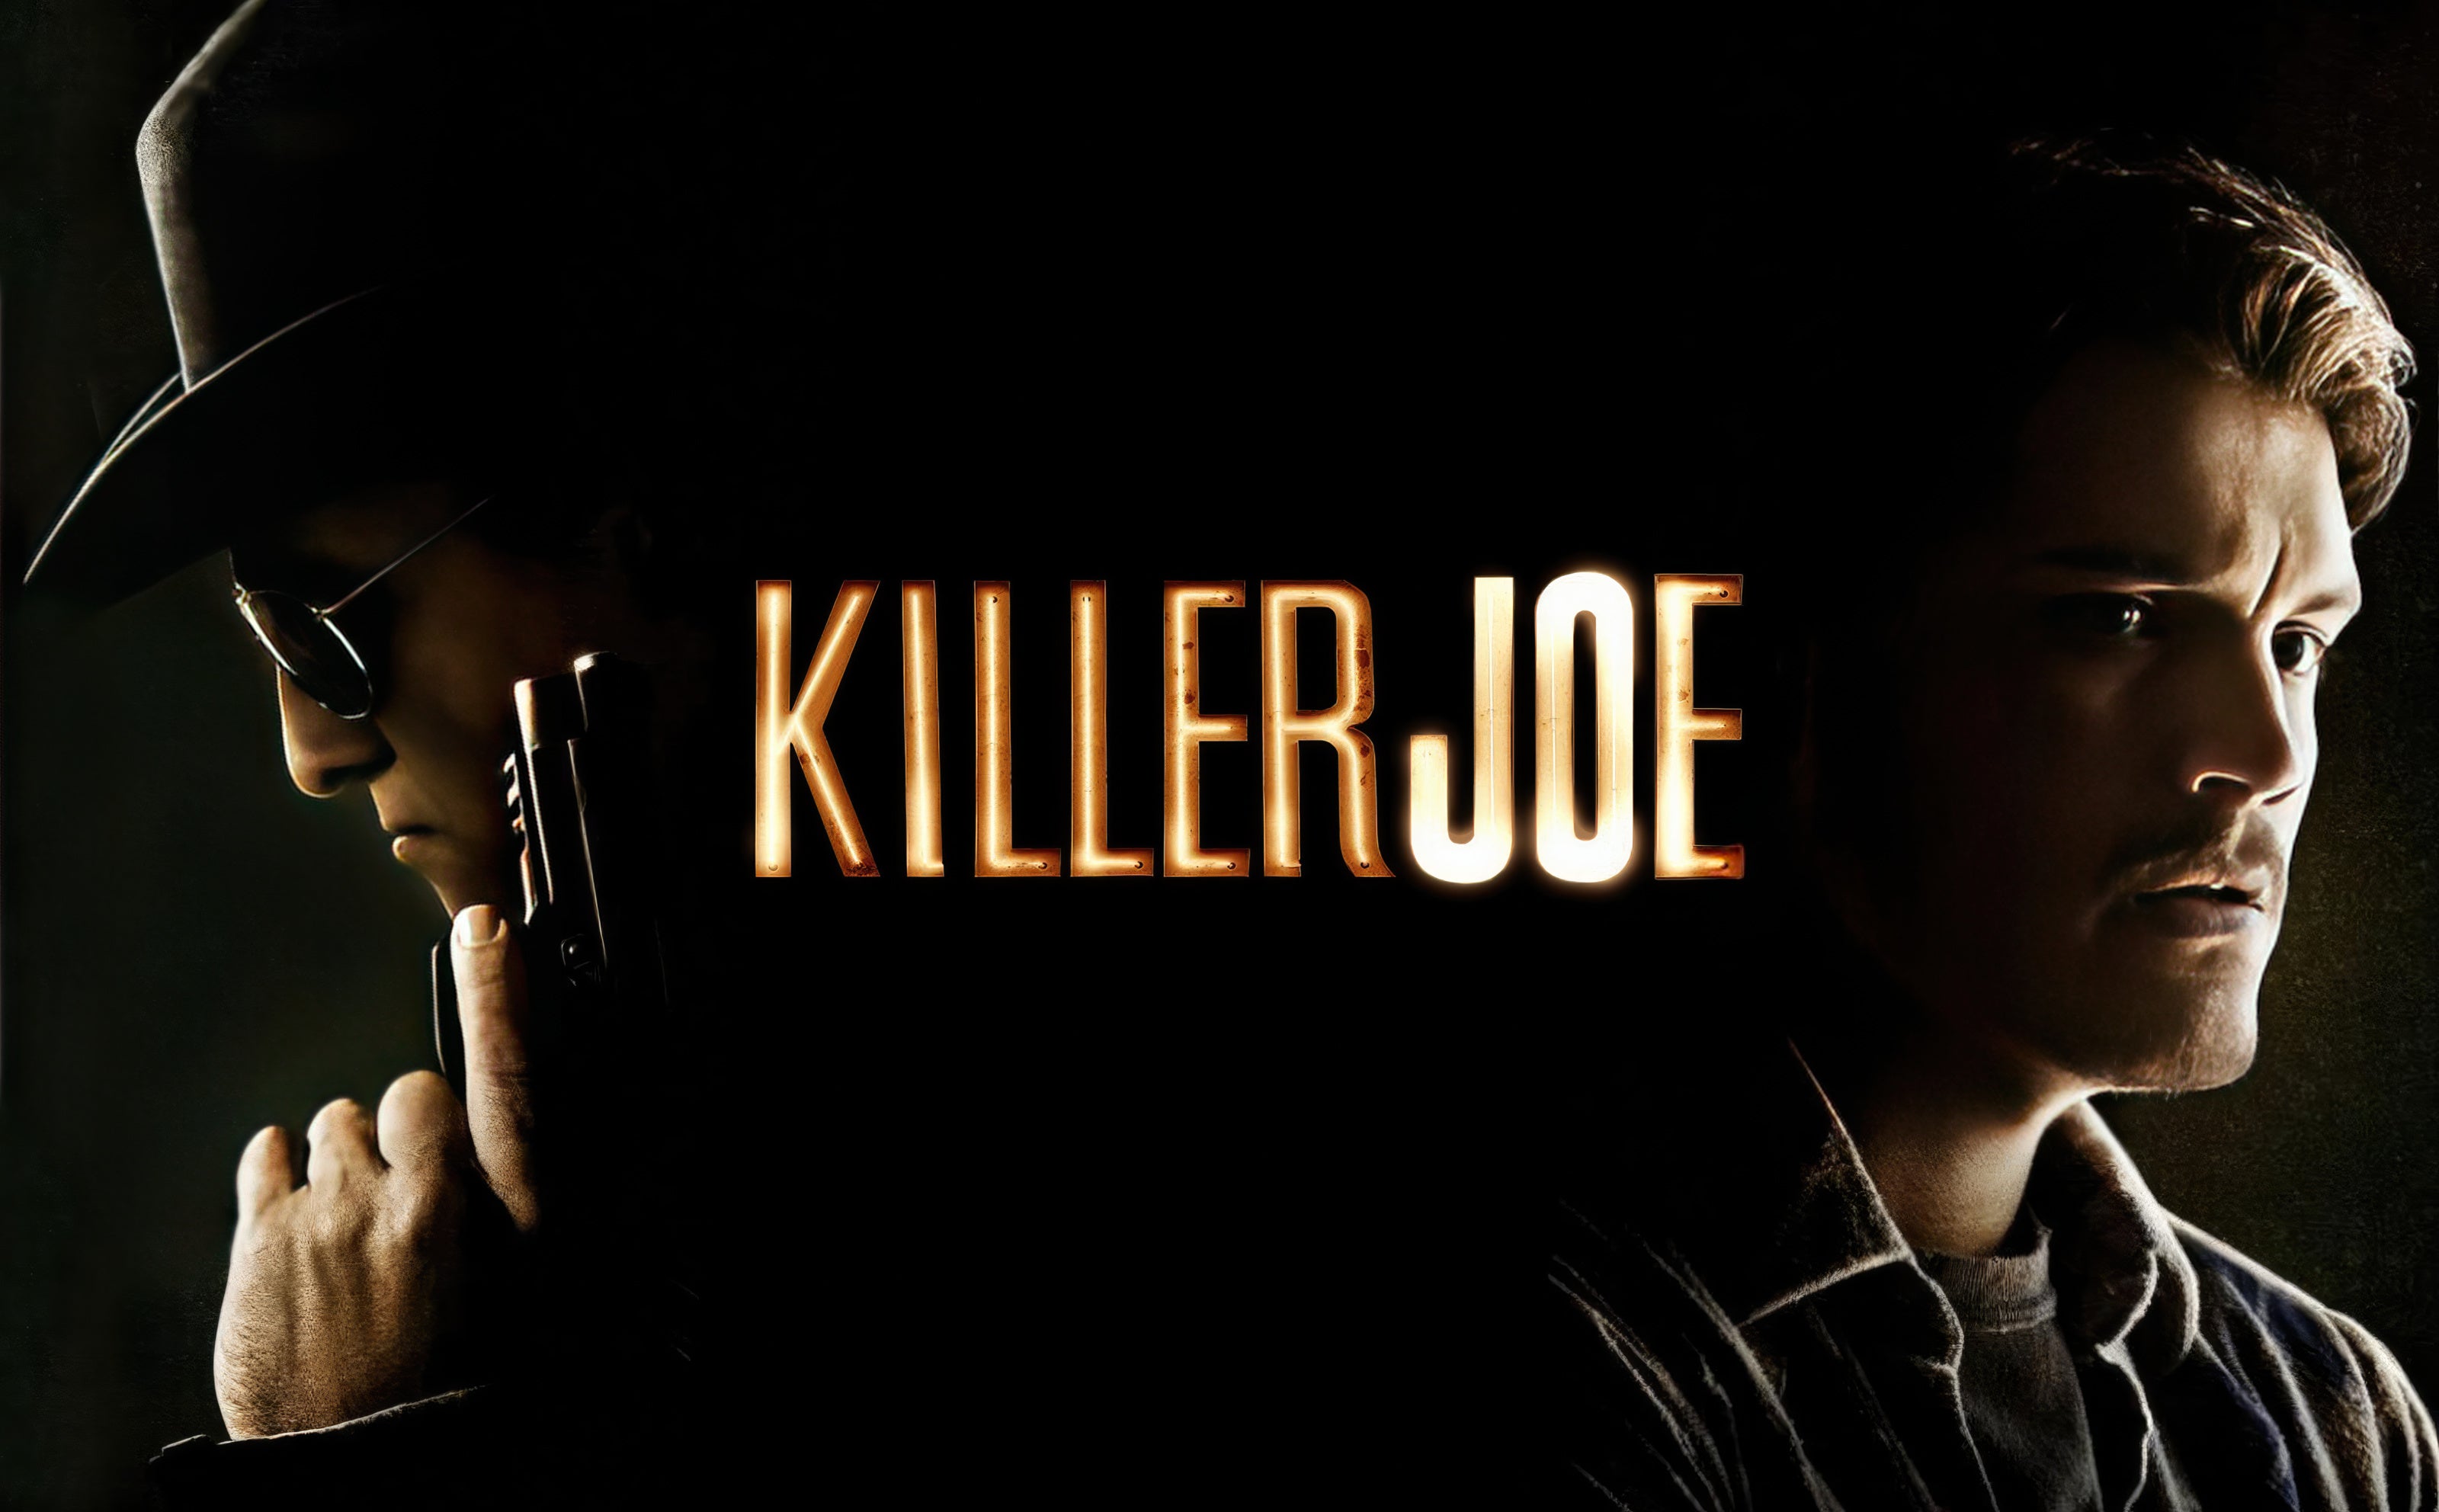 Killer Joe Stage Play Script - Image of Movie Film Poster